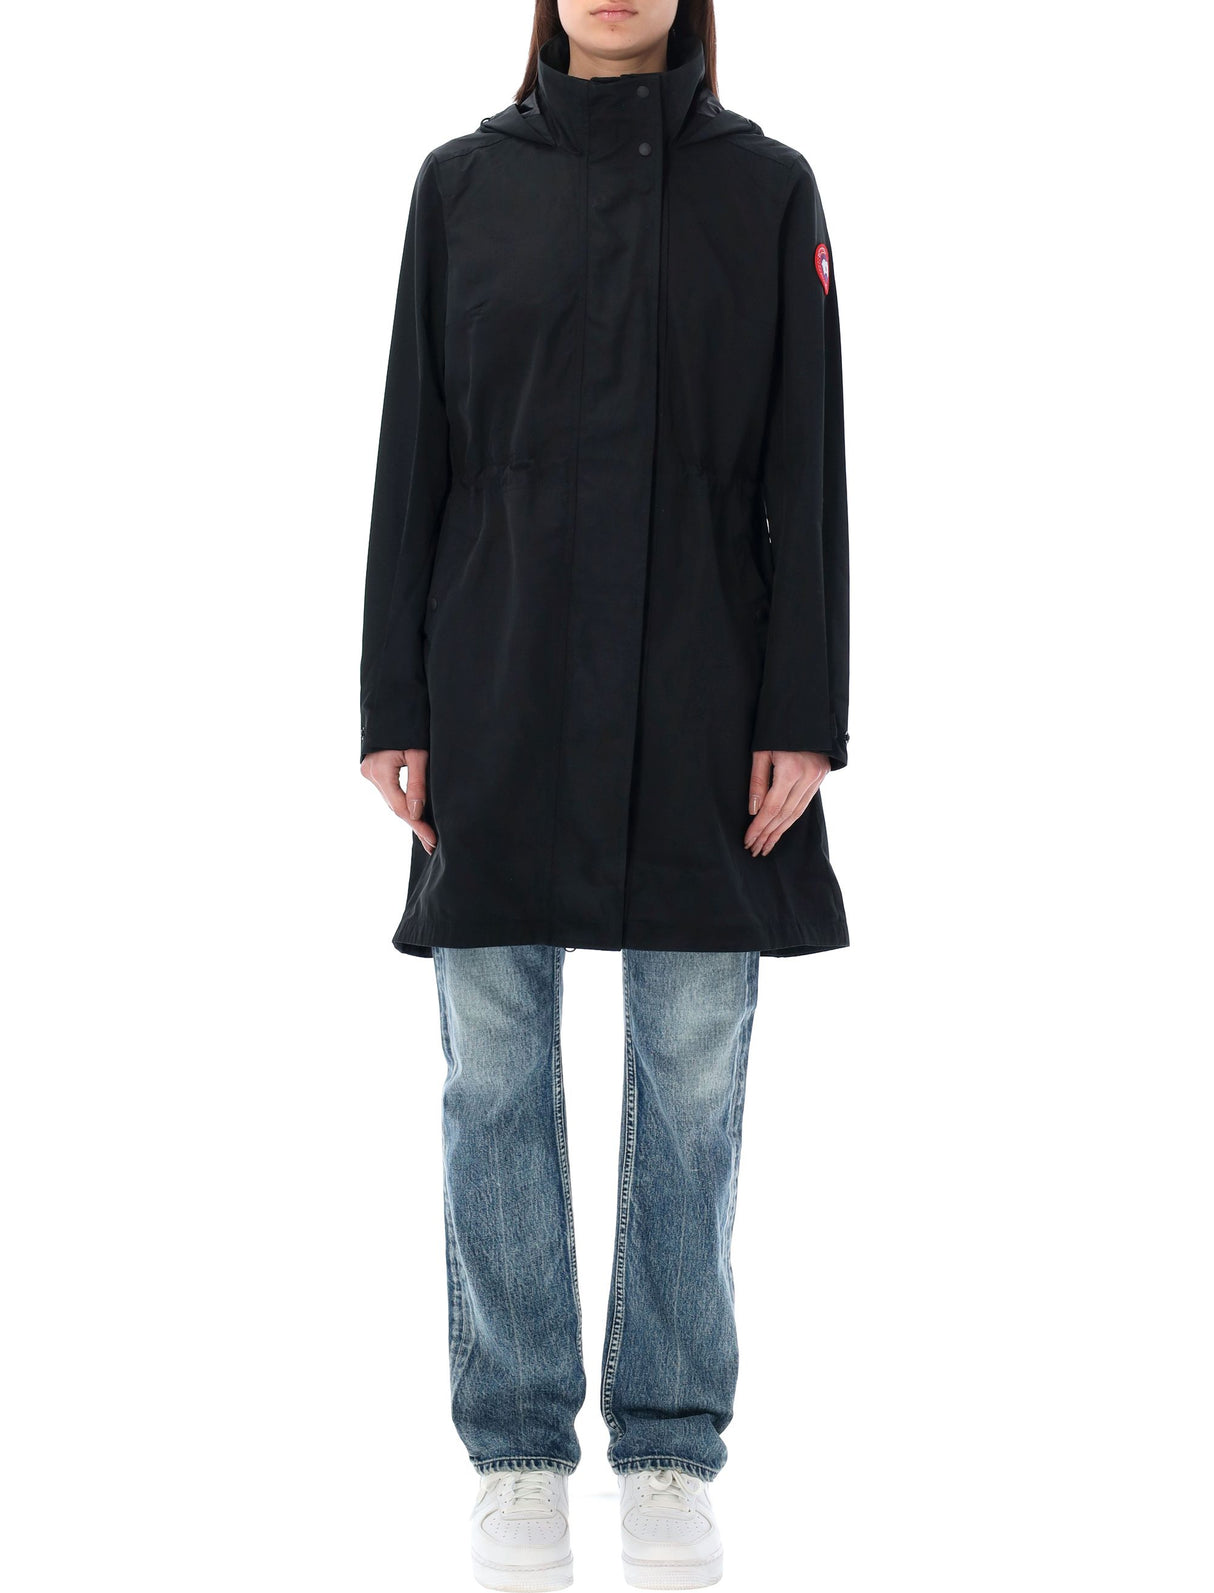 CANADA GOOSE Black belcarra jacket with adjustable hood and reflective details